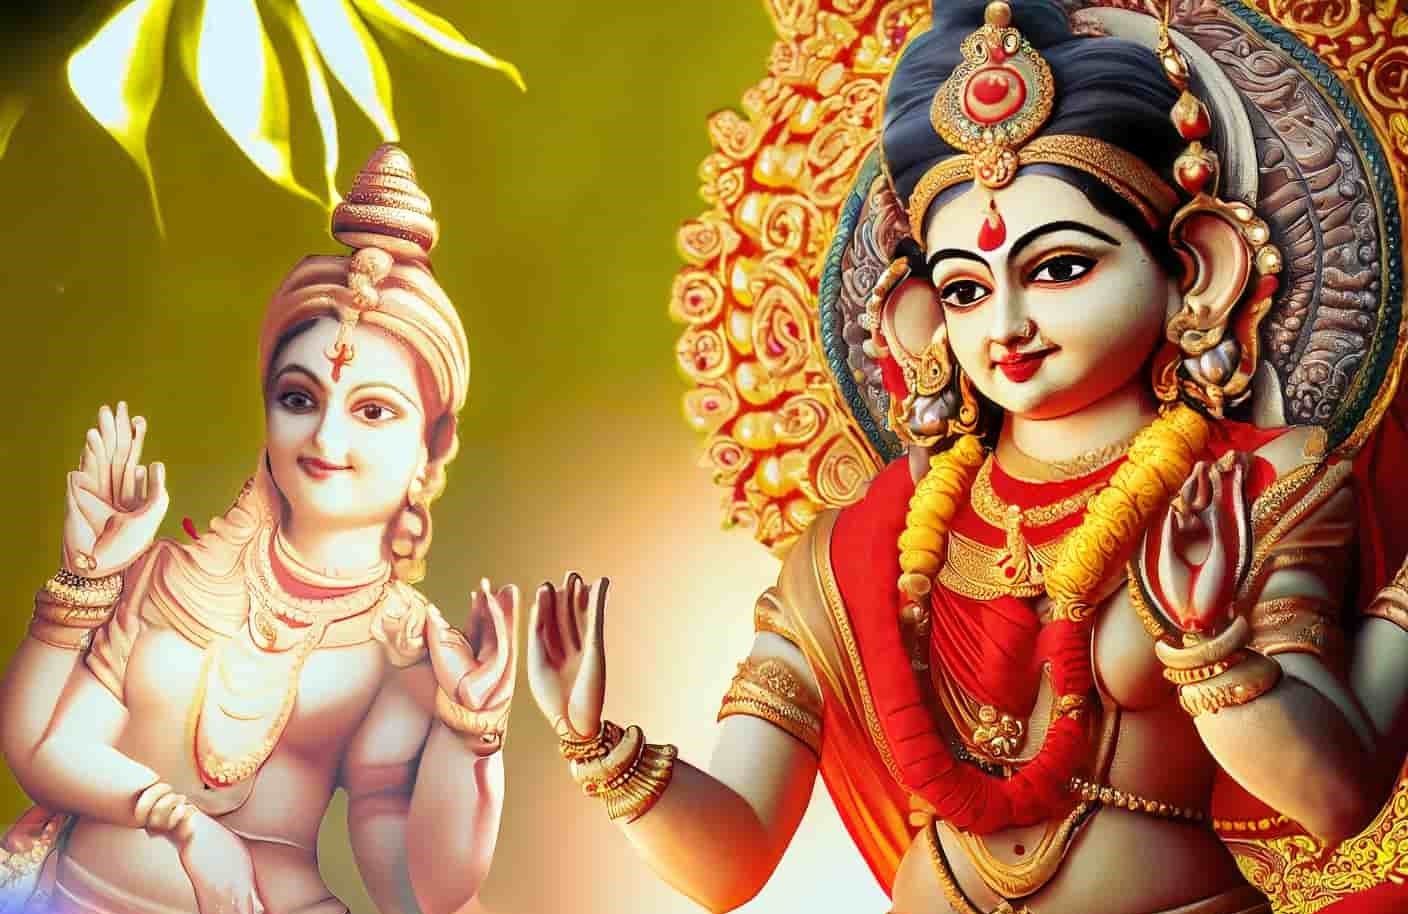 Jaya Parvati Vrat: Significance, Rituals, and Celebration